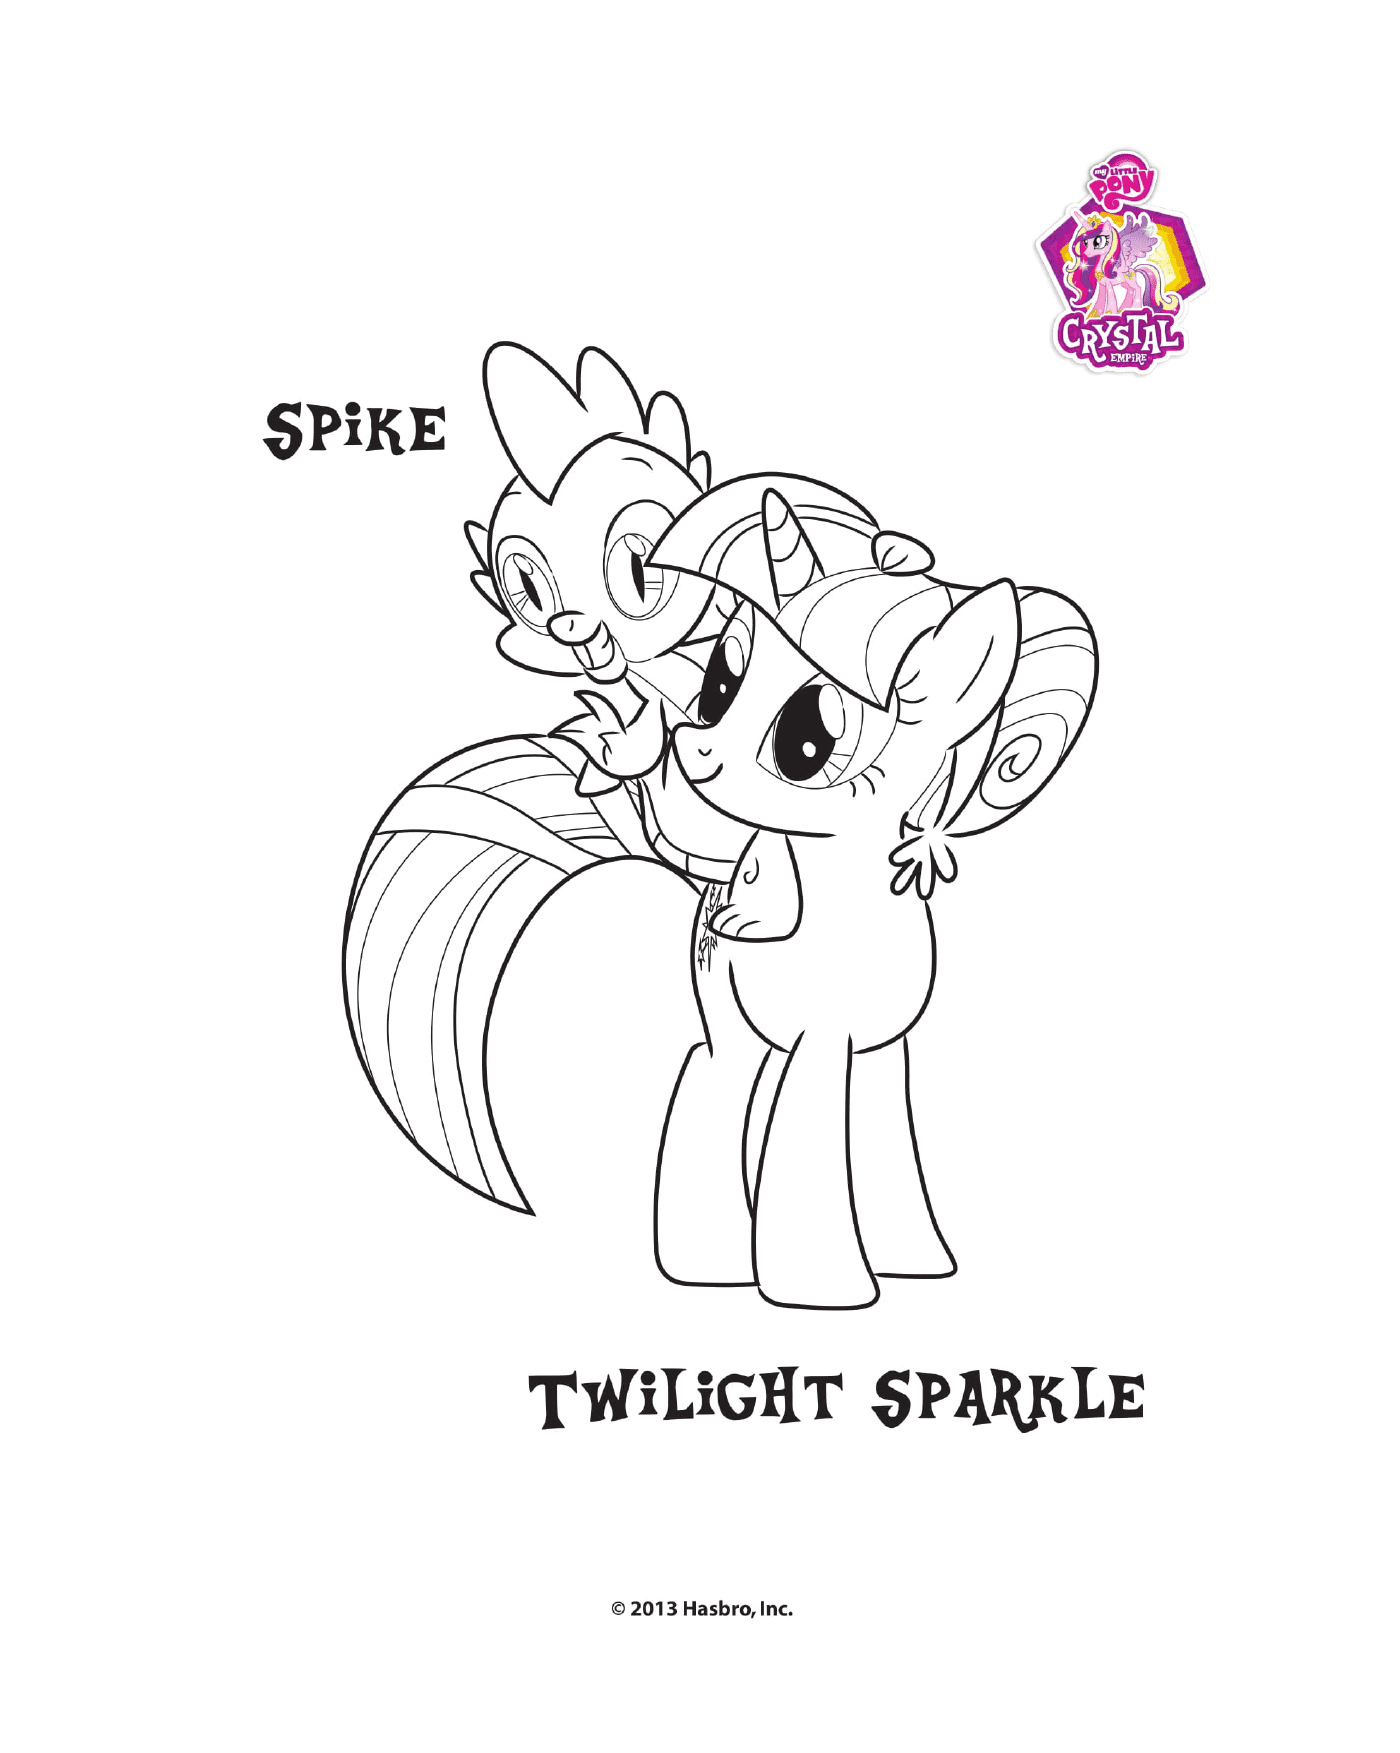  Spike e Twilight Sparkle al Crystal Empire 